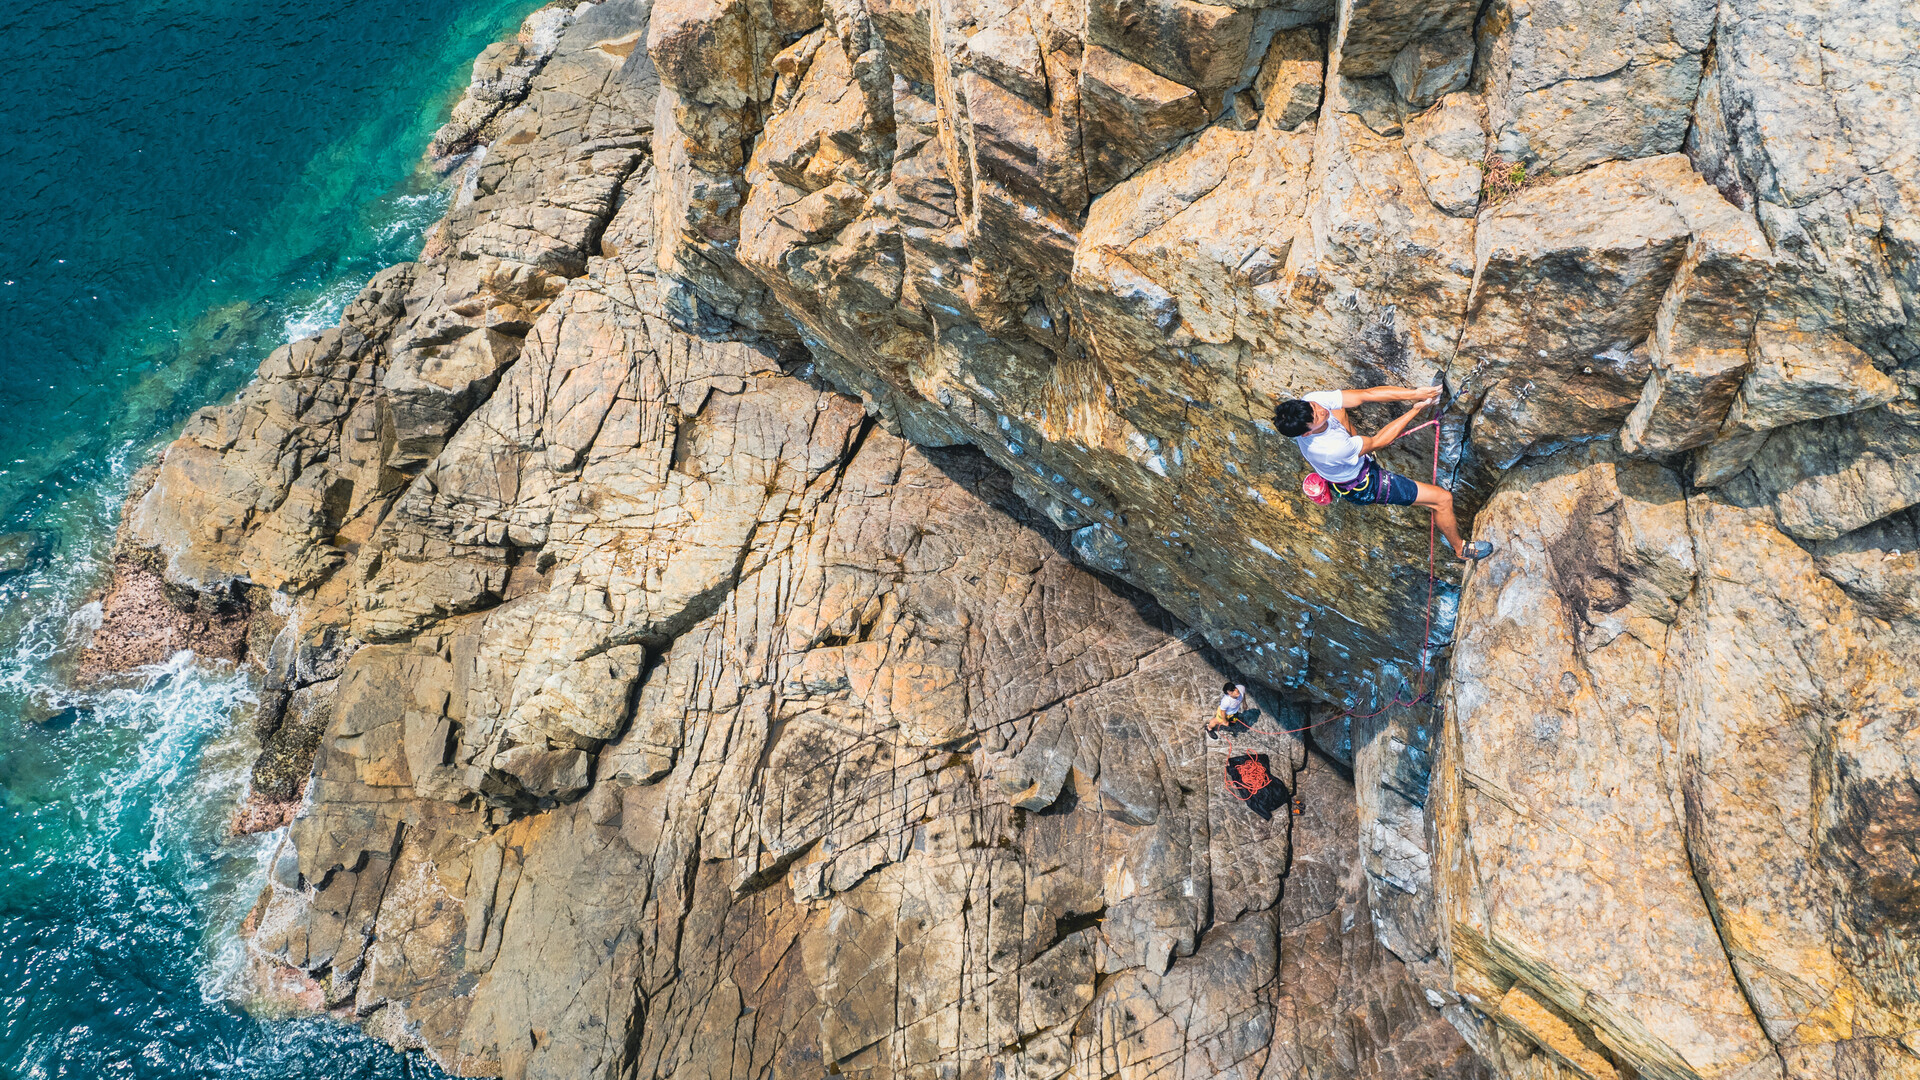 Person rock climbing a steep cliff above the sea